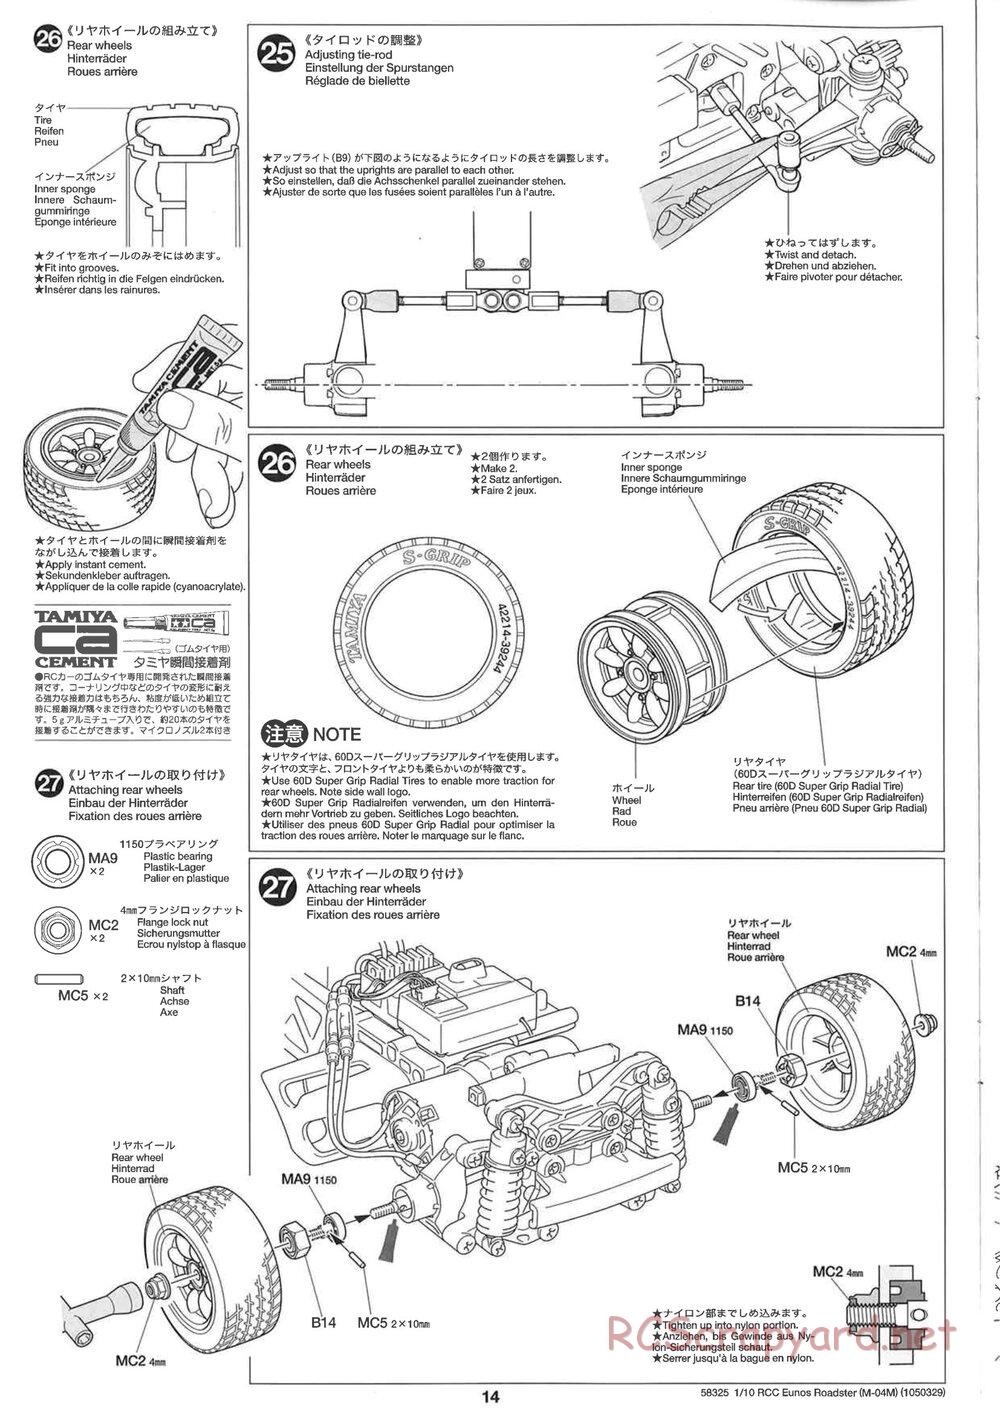 Tamiya - Eunos Roadster - M04M Chassis - Manual - Page 14